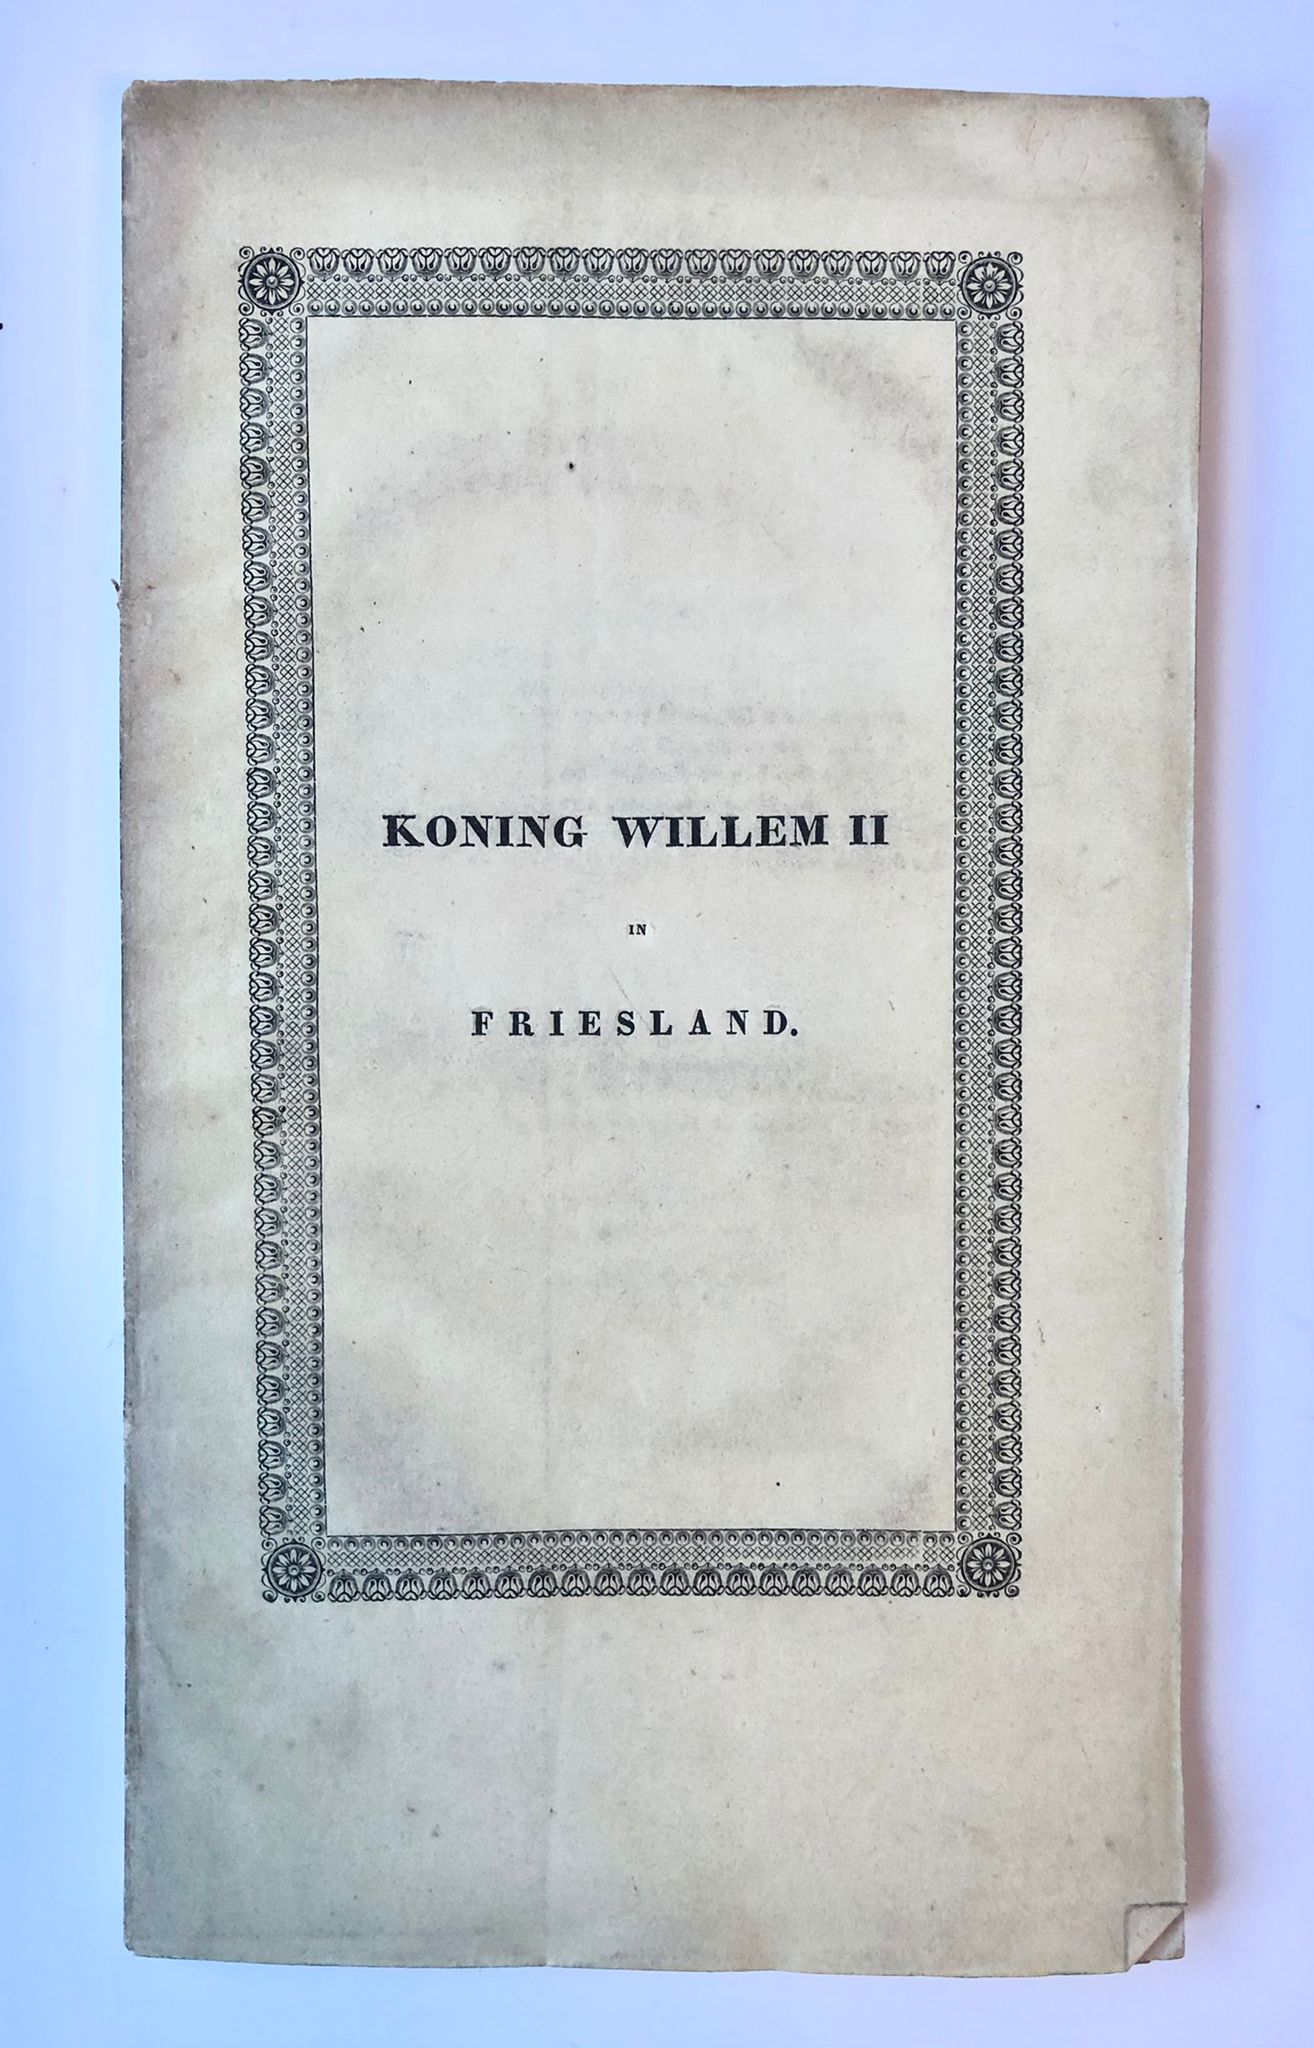 [Friesland, 1842] Koning Willem II in Friesland, 1841, bij G. T. N. Suringar, 1842, 70 pp.